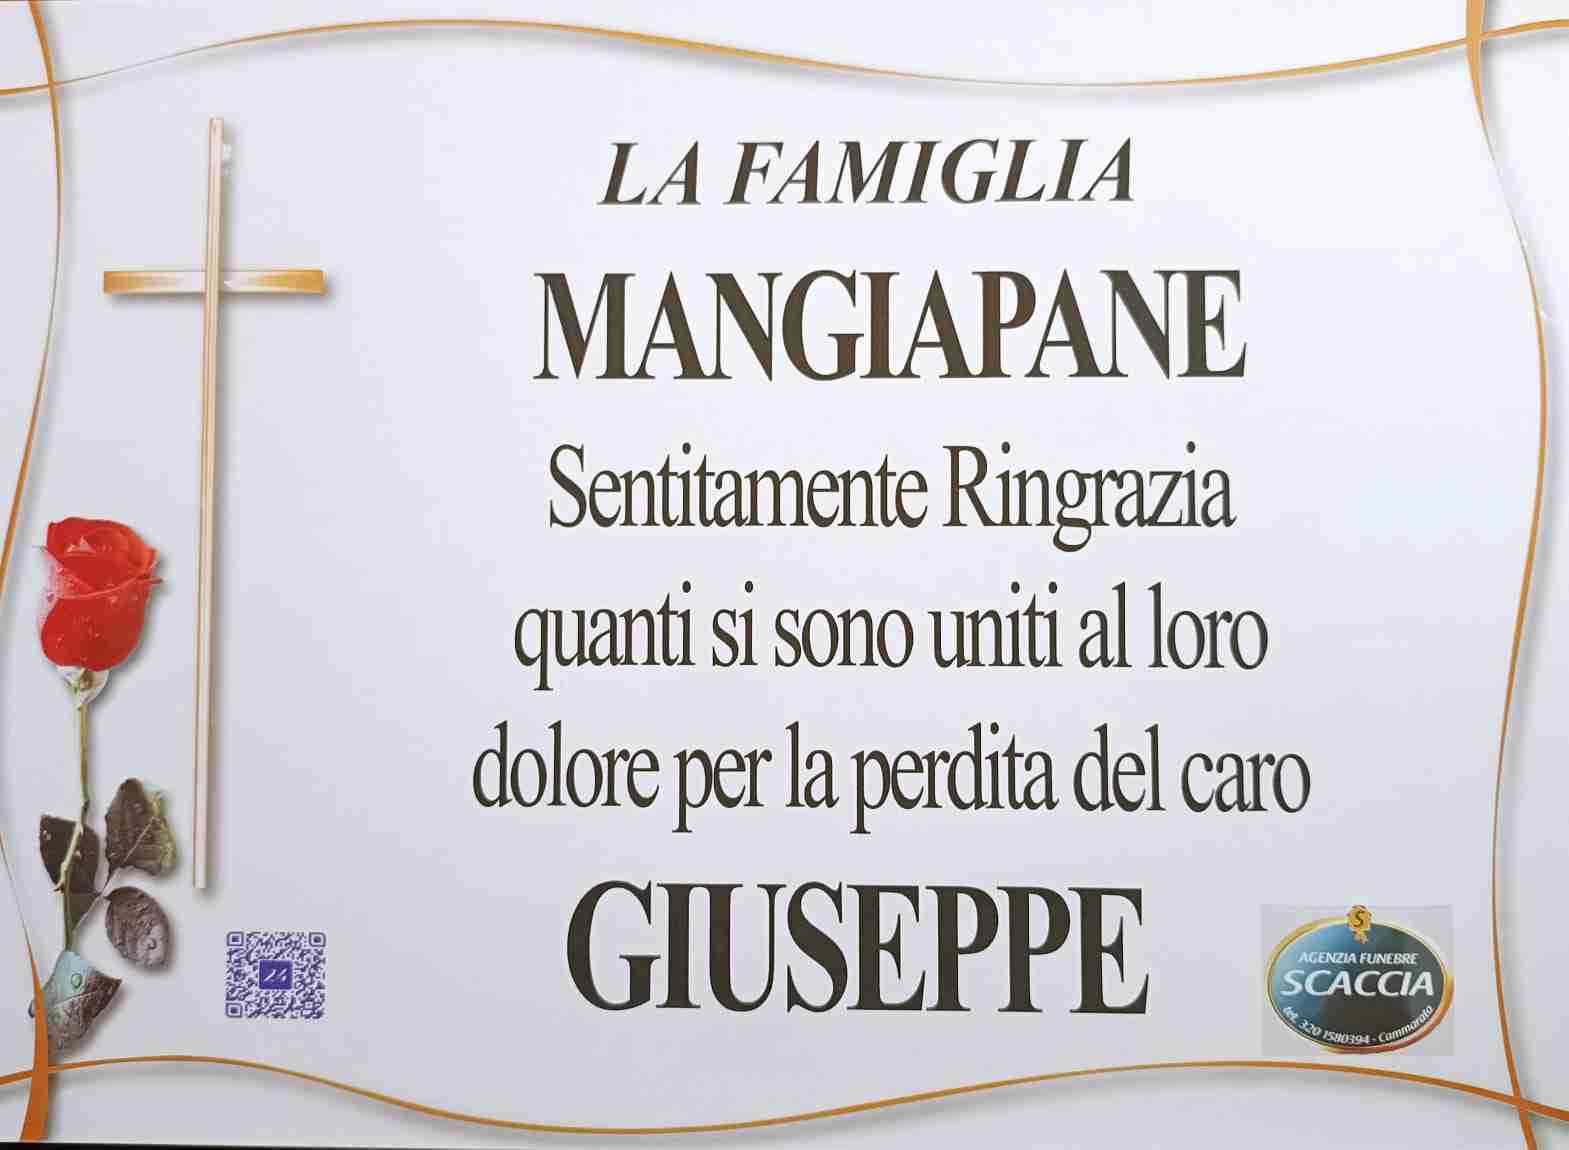 Giuseppe Mangiapane